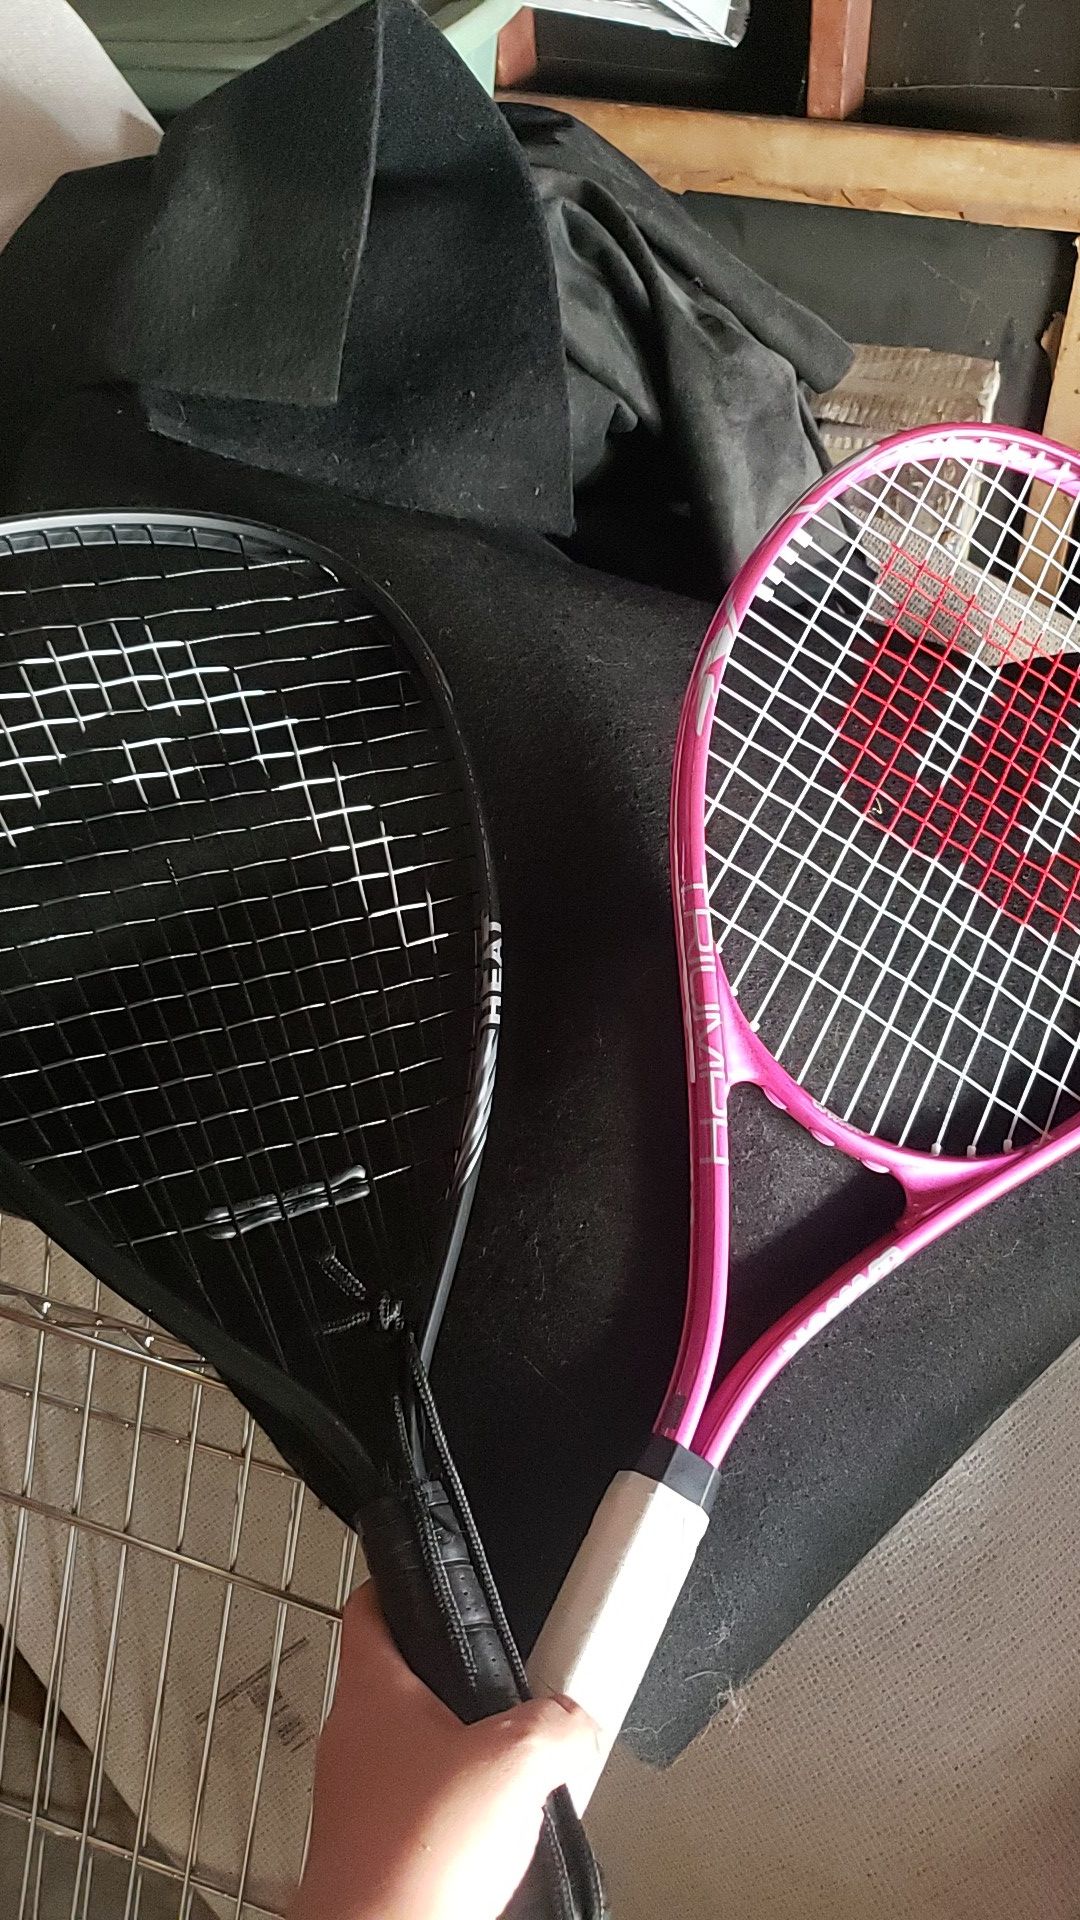 Pair of tennis rackets